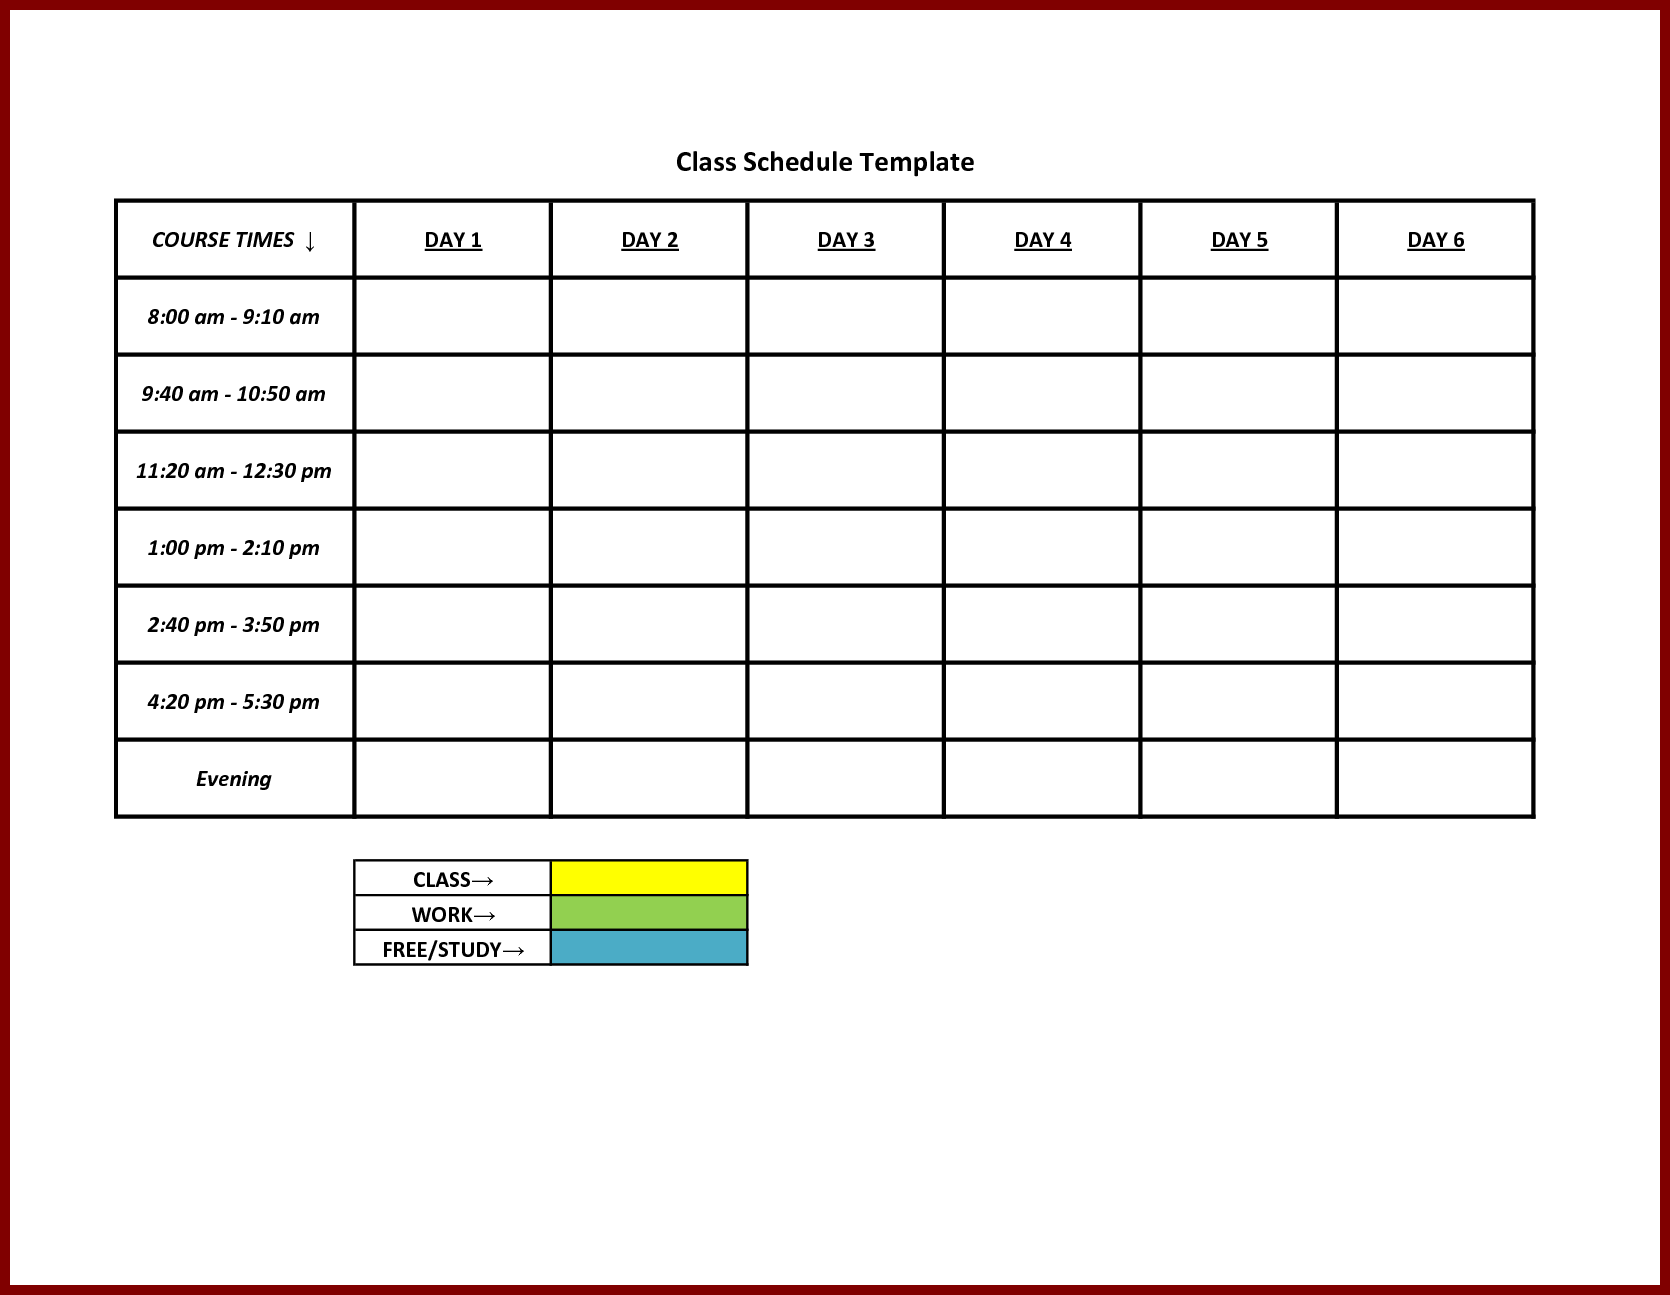 Printable Work Schedule Templates